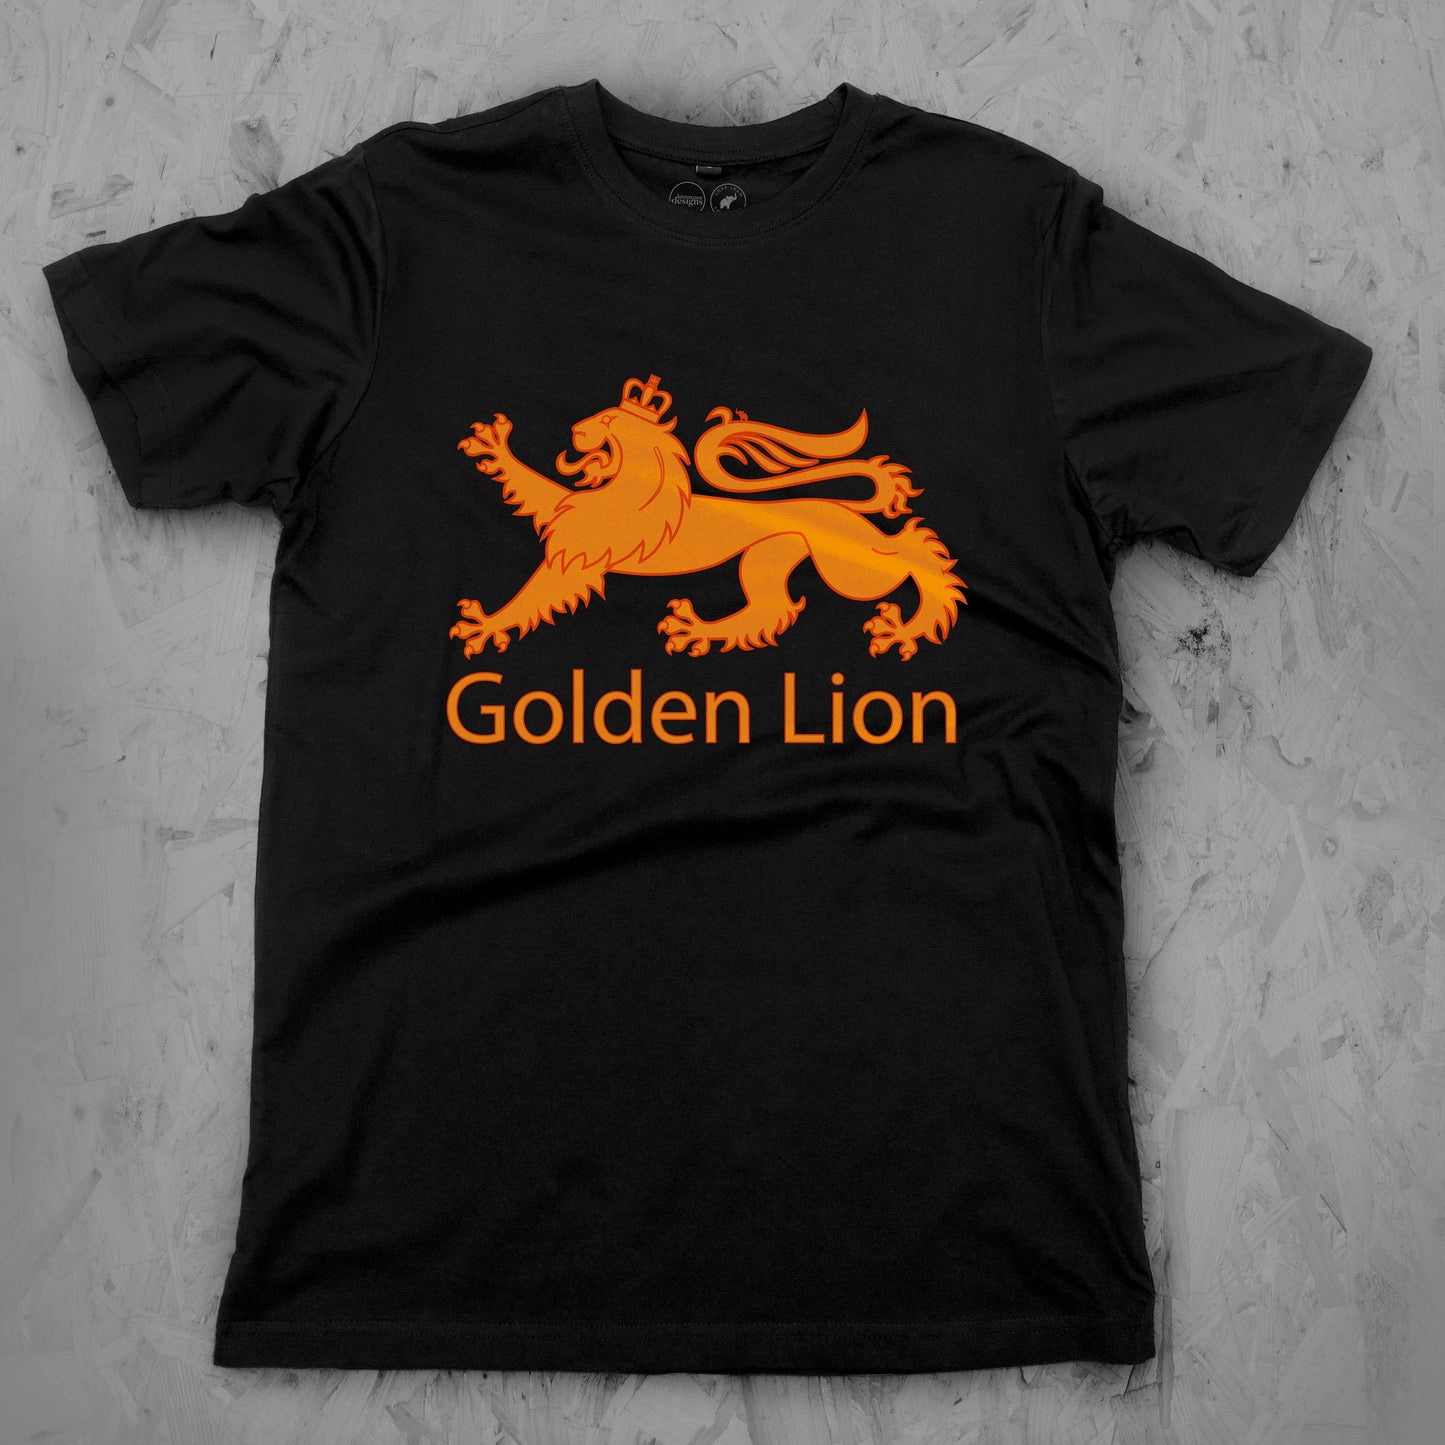 Golden Lion Tee Child's sizes 3-14 years